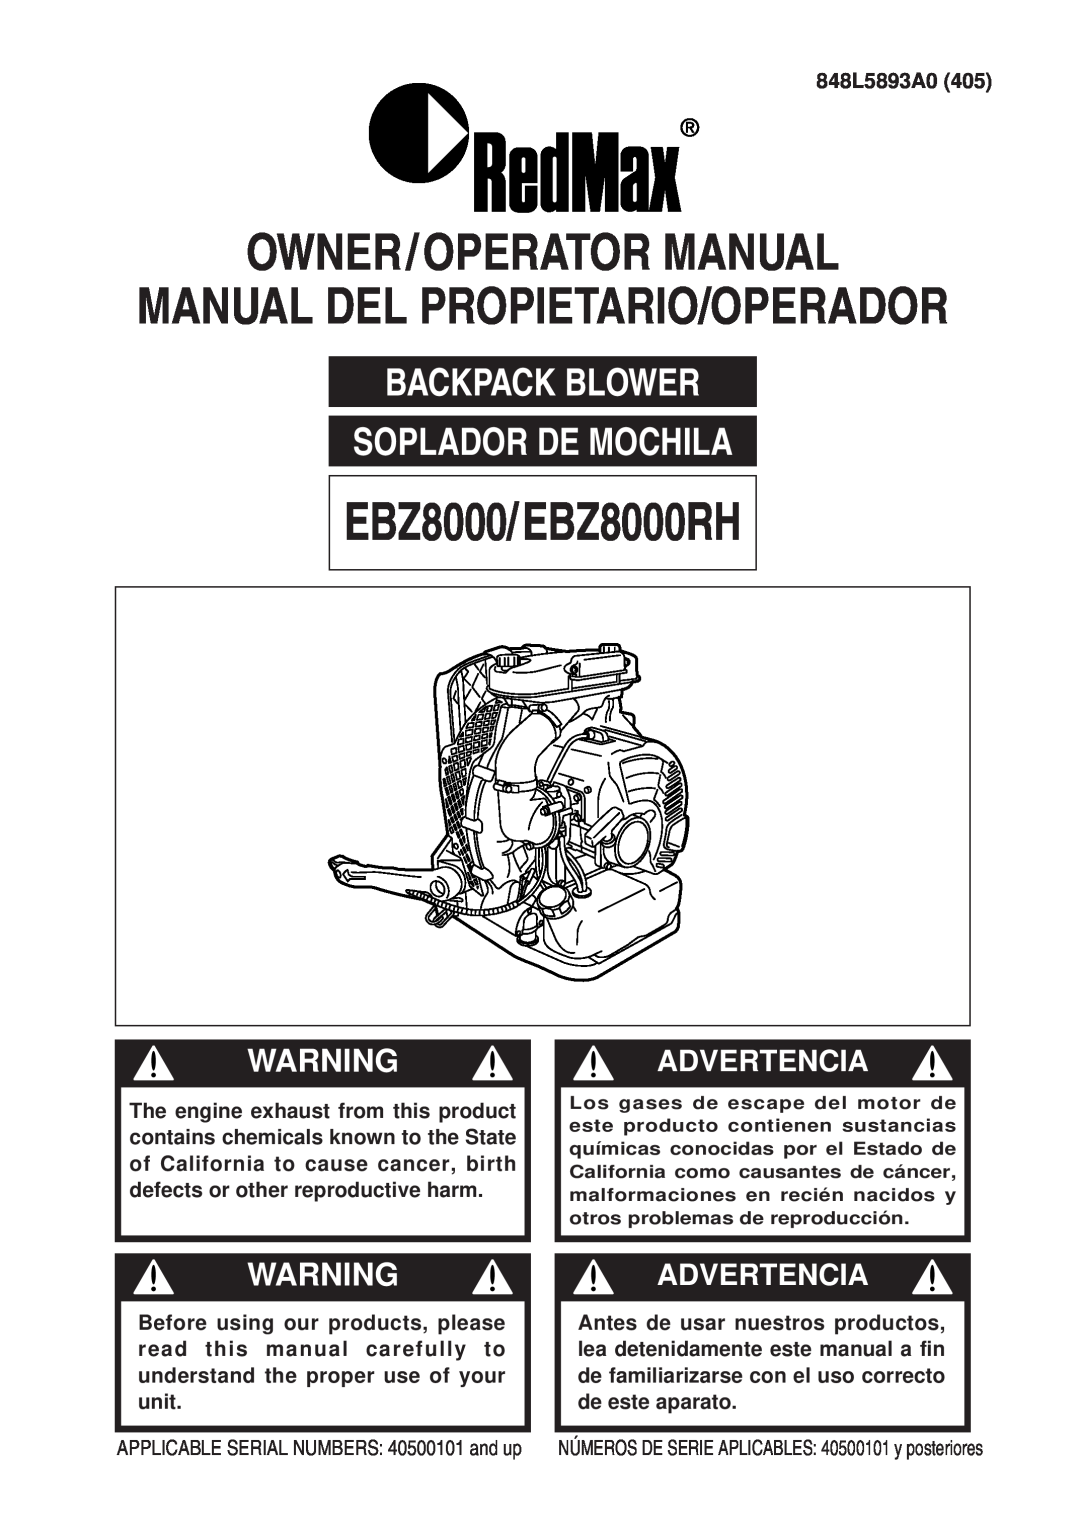 RedMax manual EBZ8000/ EBZ8000RH, Owner / Operator Manual, Backpack Blower Soplador De Mochila, Advertencia 